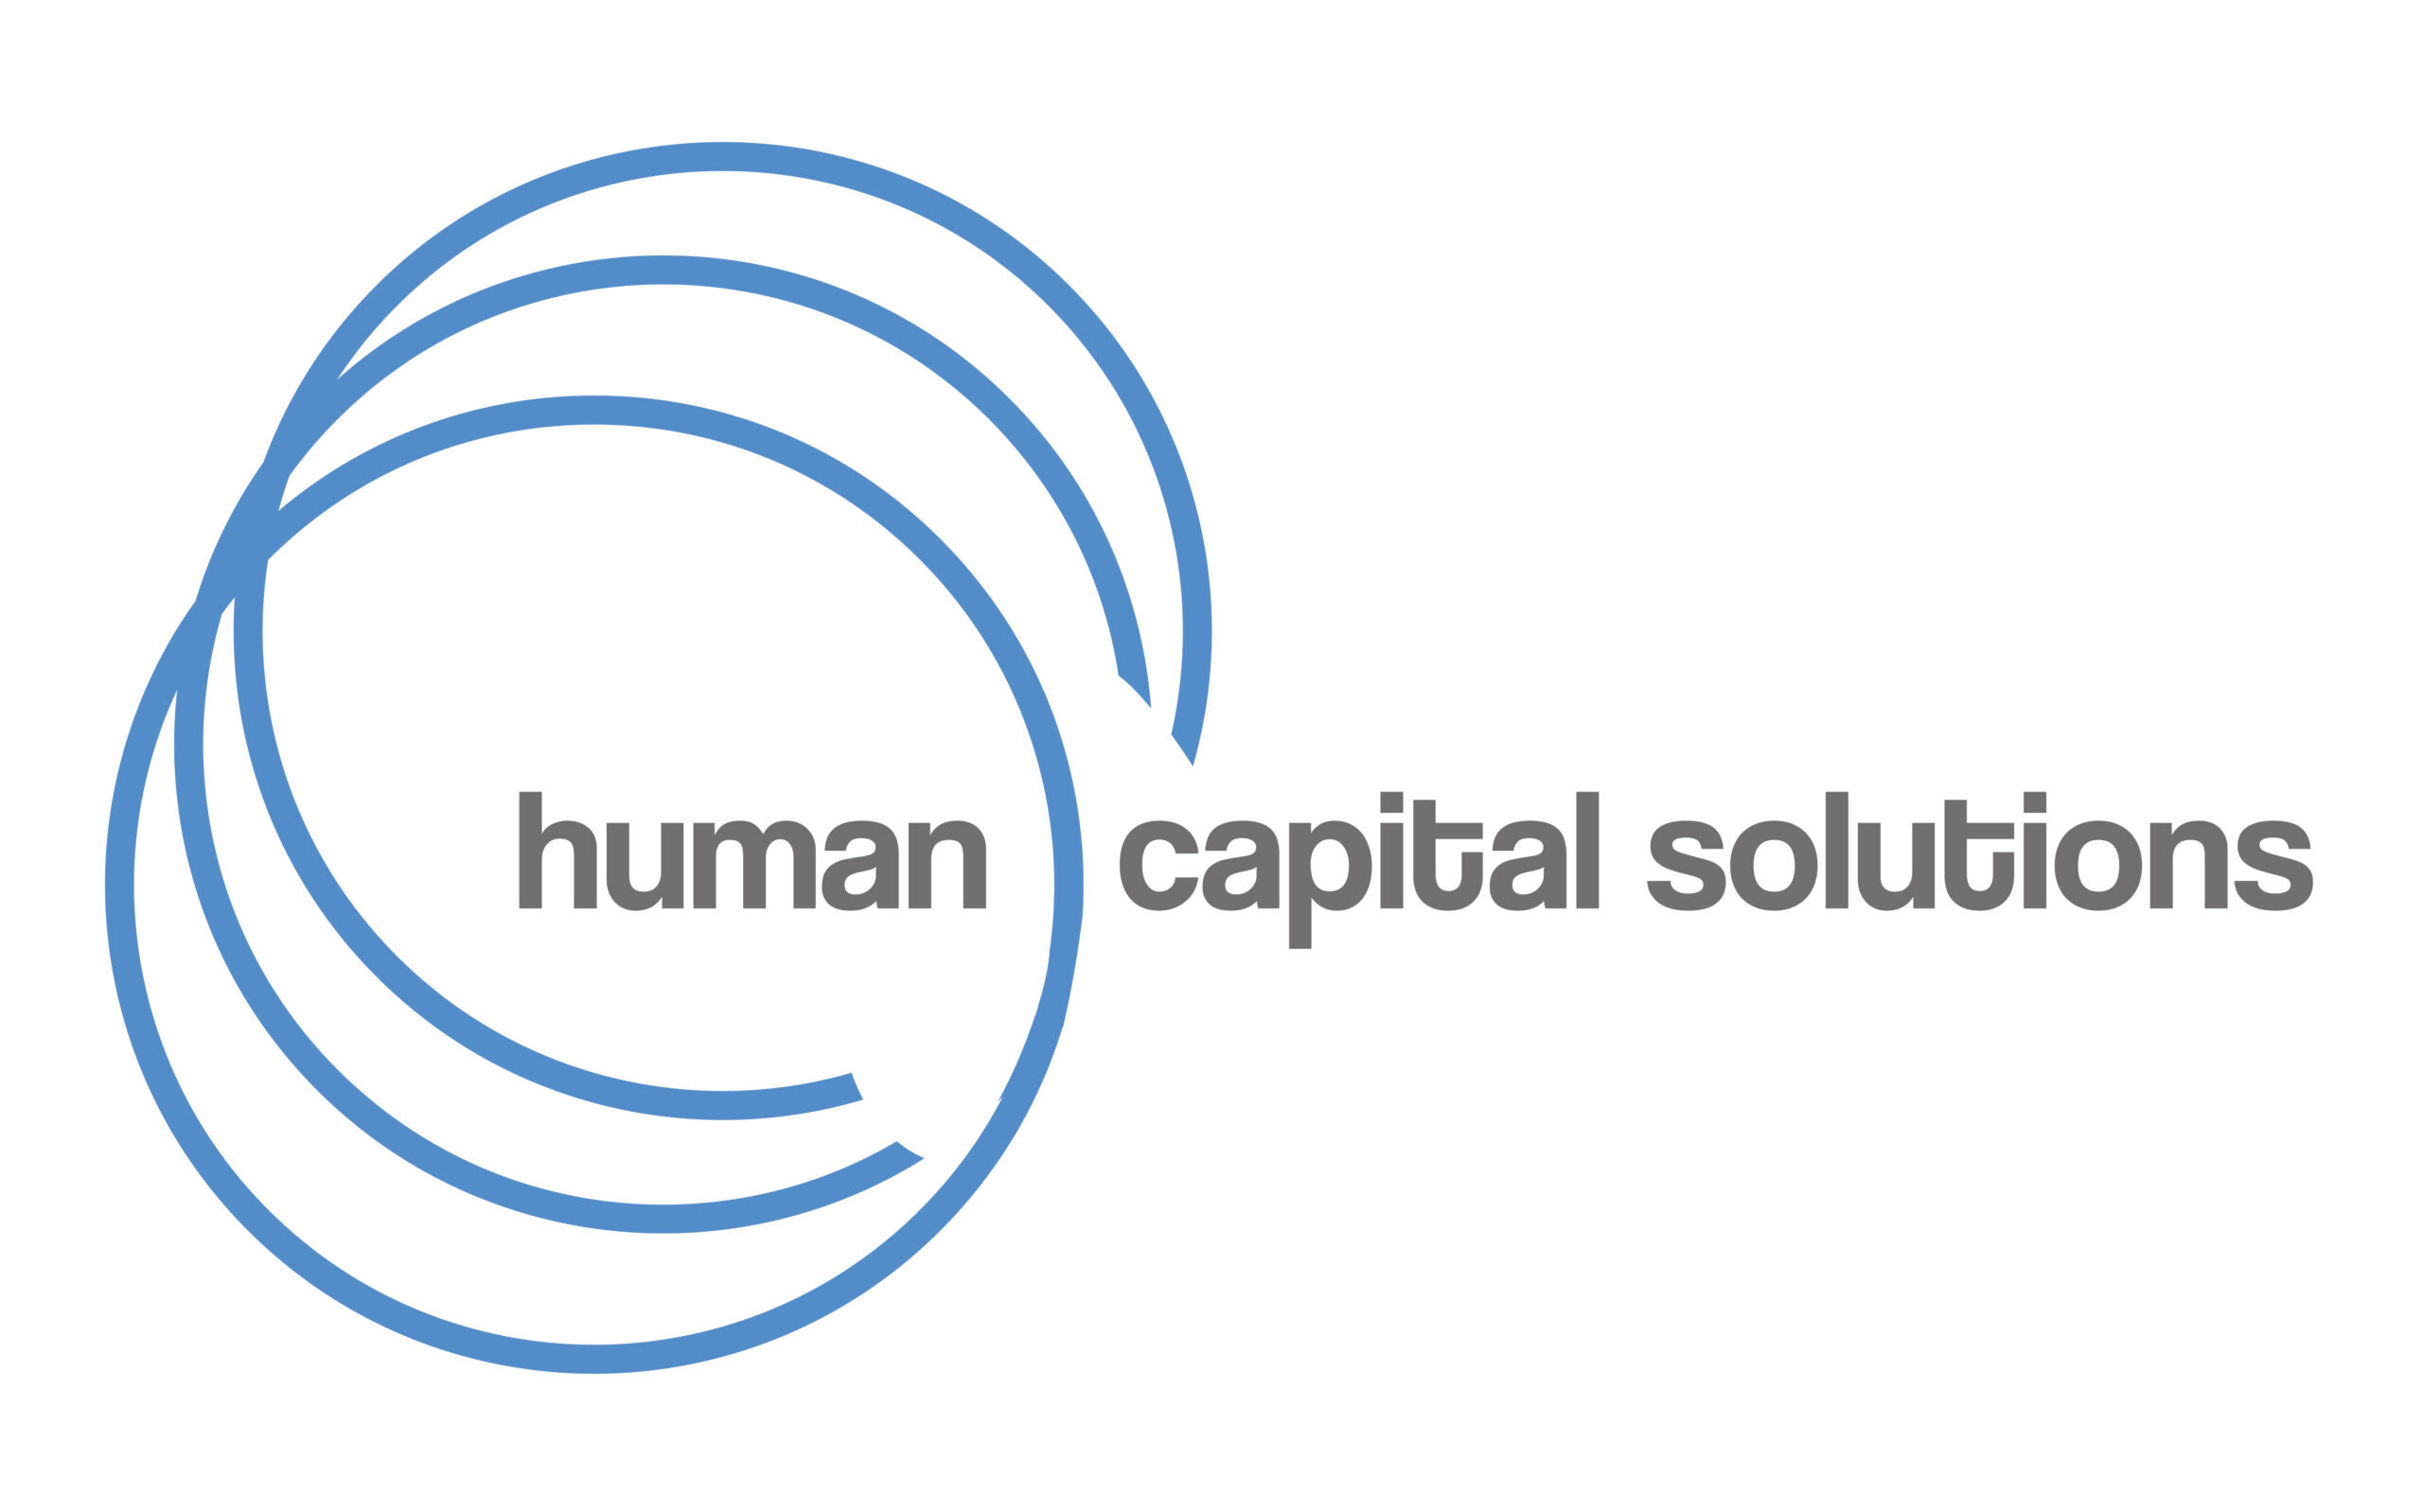 human capital solutions